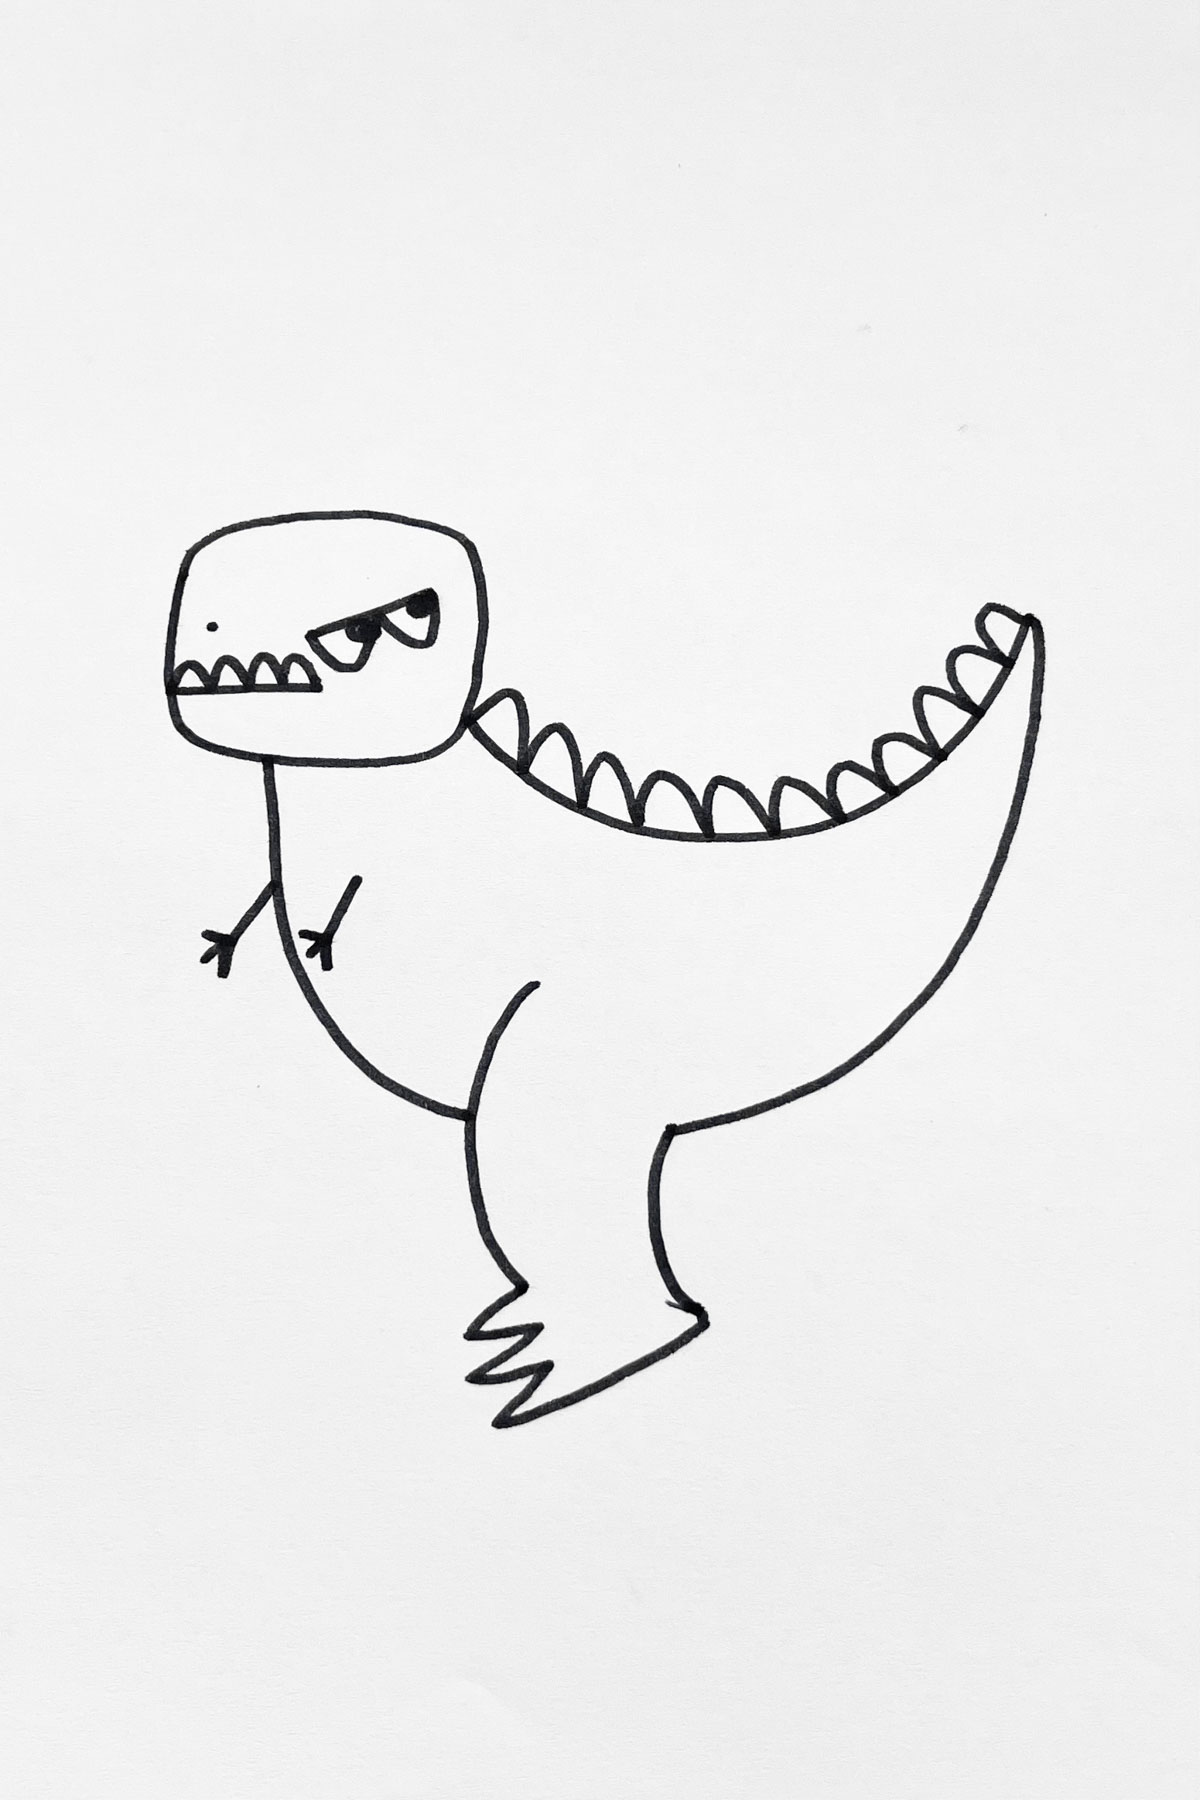 Moody T-Rex drawing